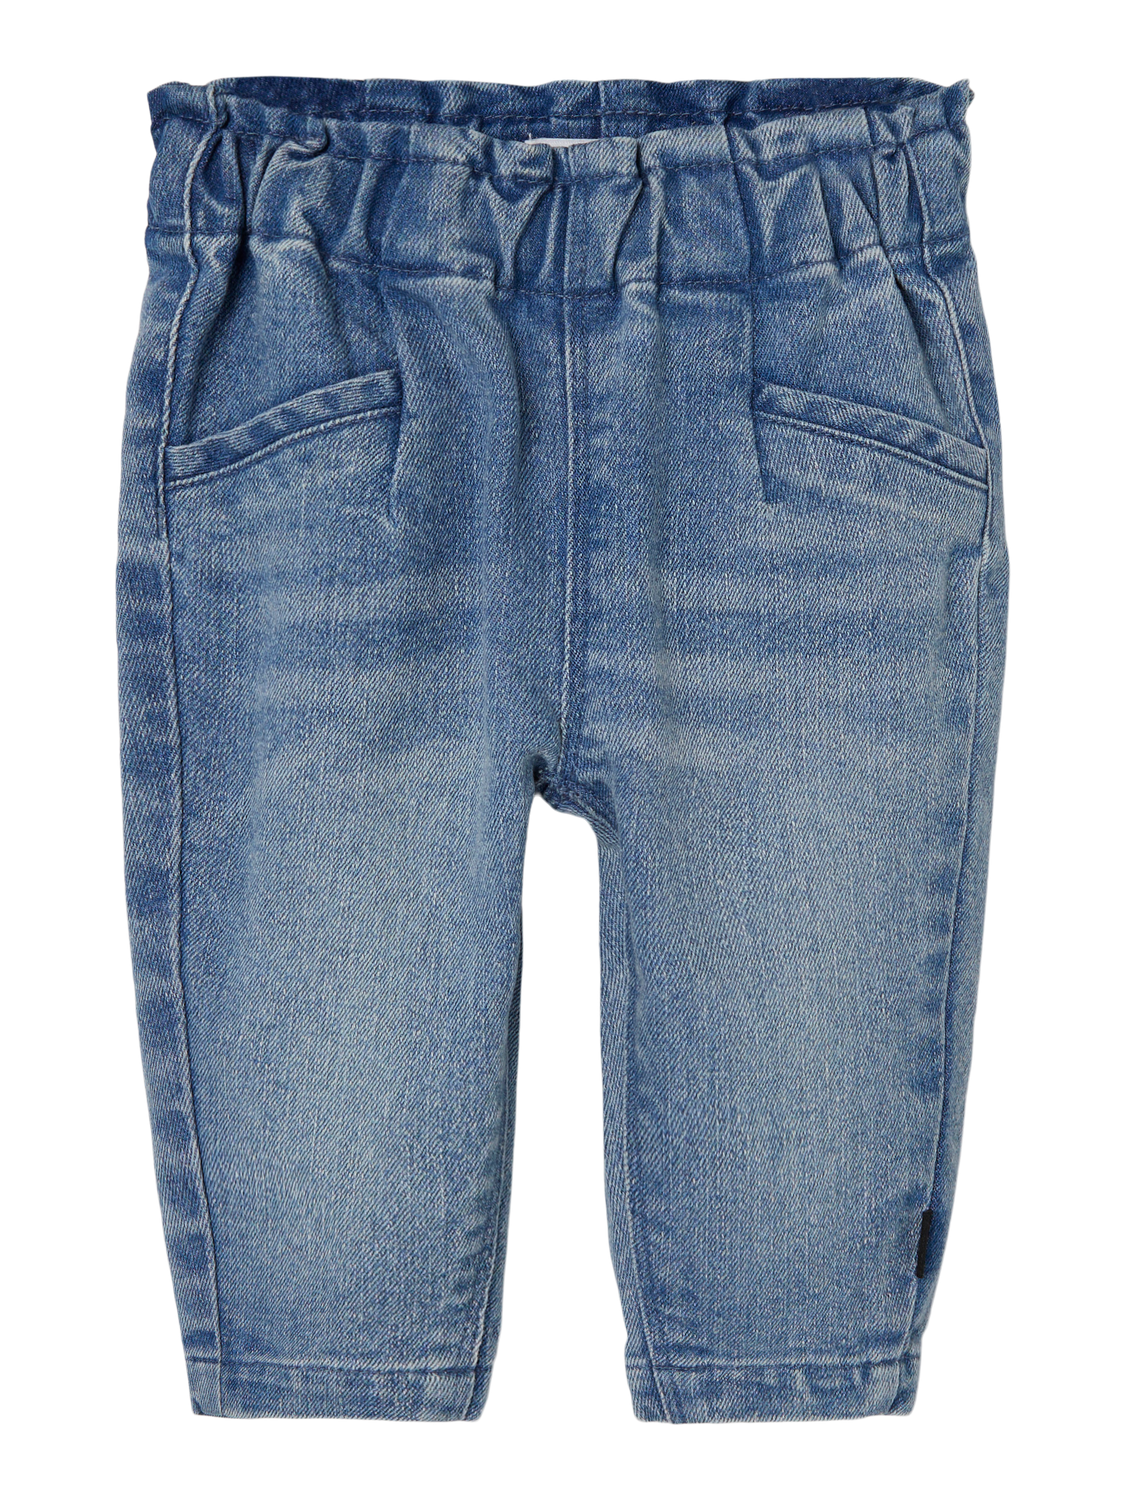 NBFROSE Jeans - Medium Blue Denim